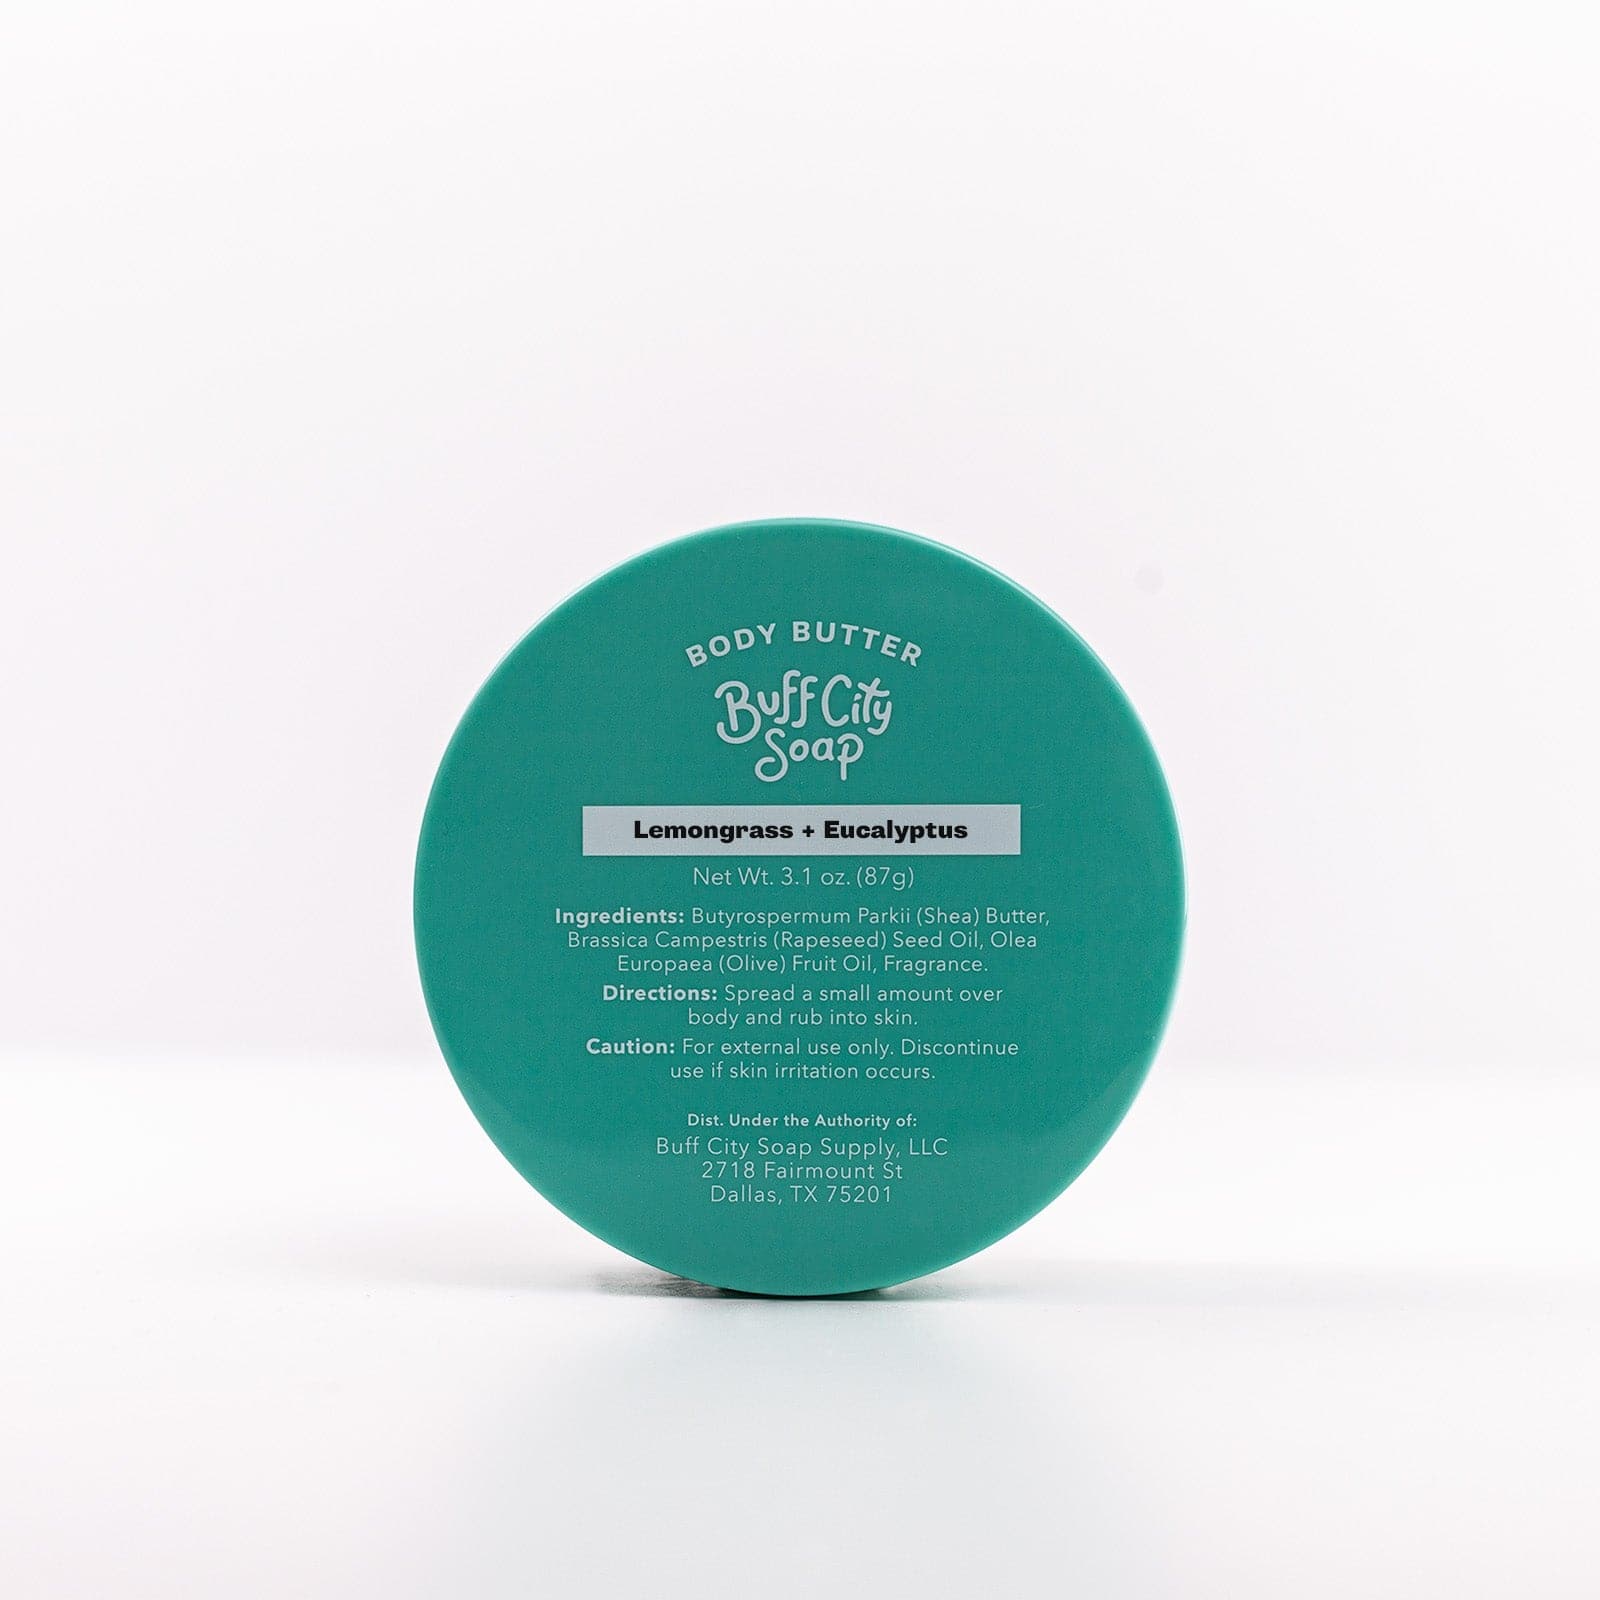 Buff City Soap's lemongrass + eucalyptus scented body butter lid listing precautions